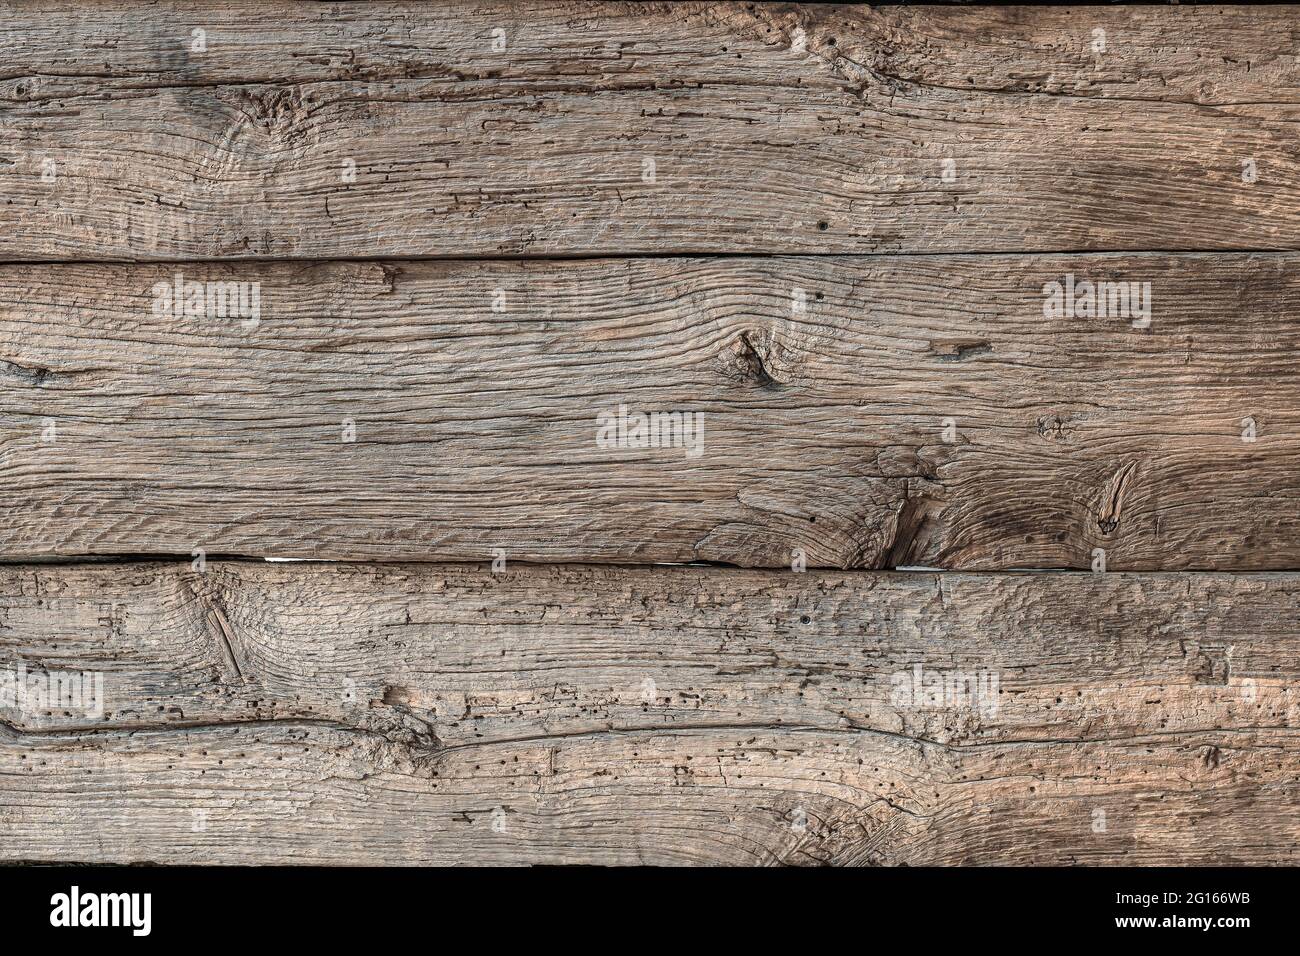 La textura de tablas lisas, limpias, marrones sin grietas Foto de stock